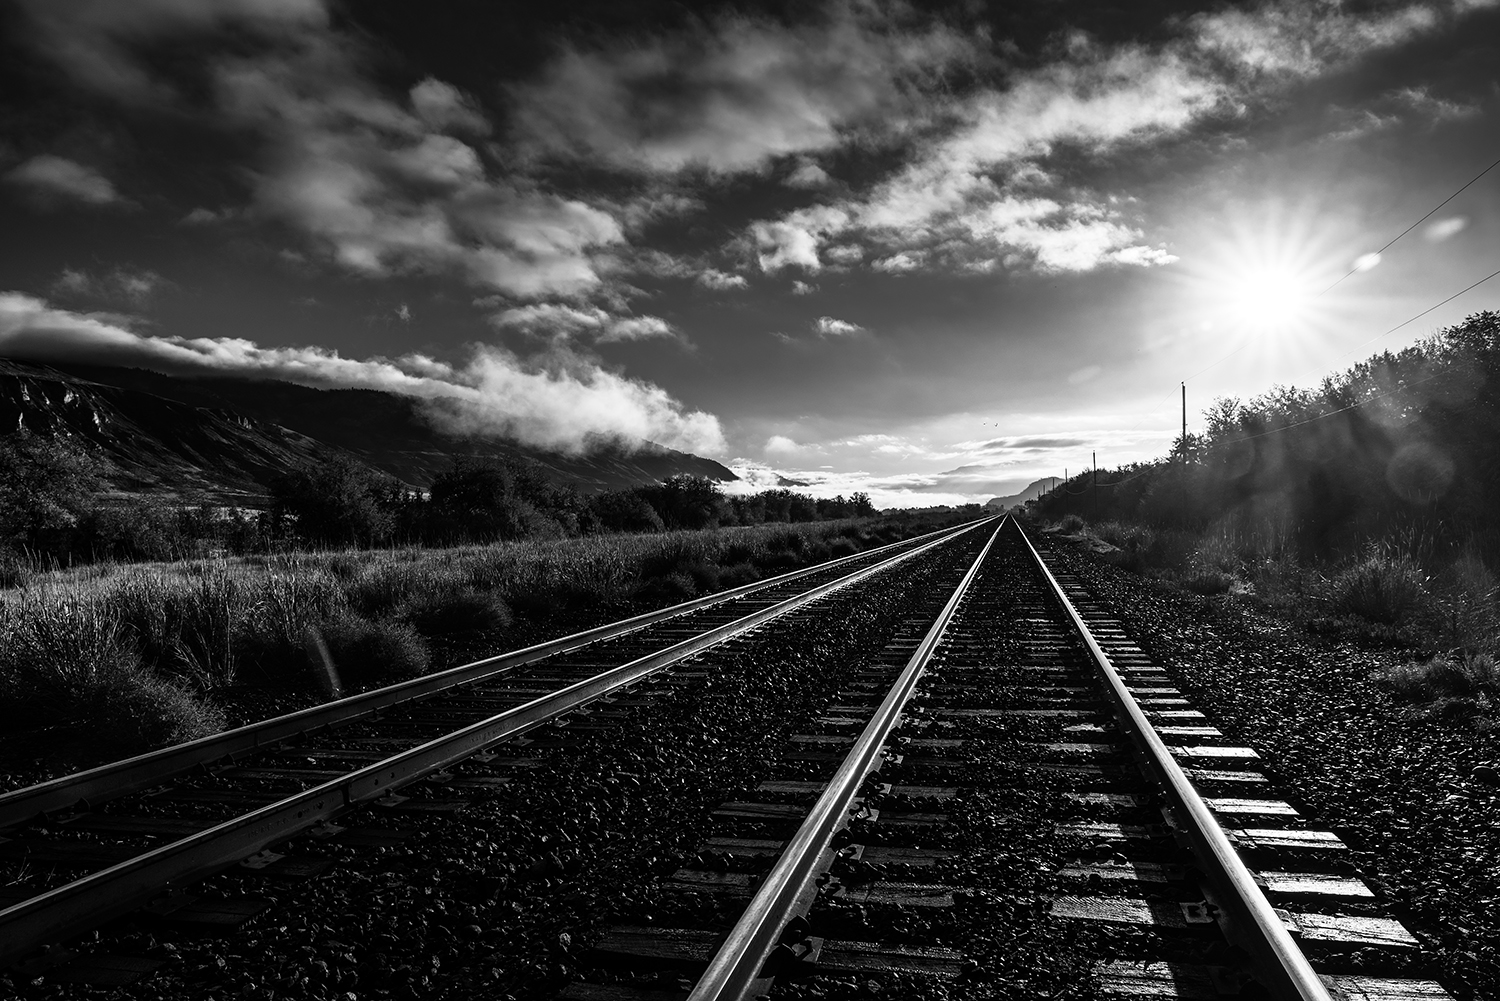 Kamloops grayscale photo with railroad tracks